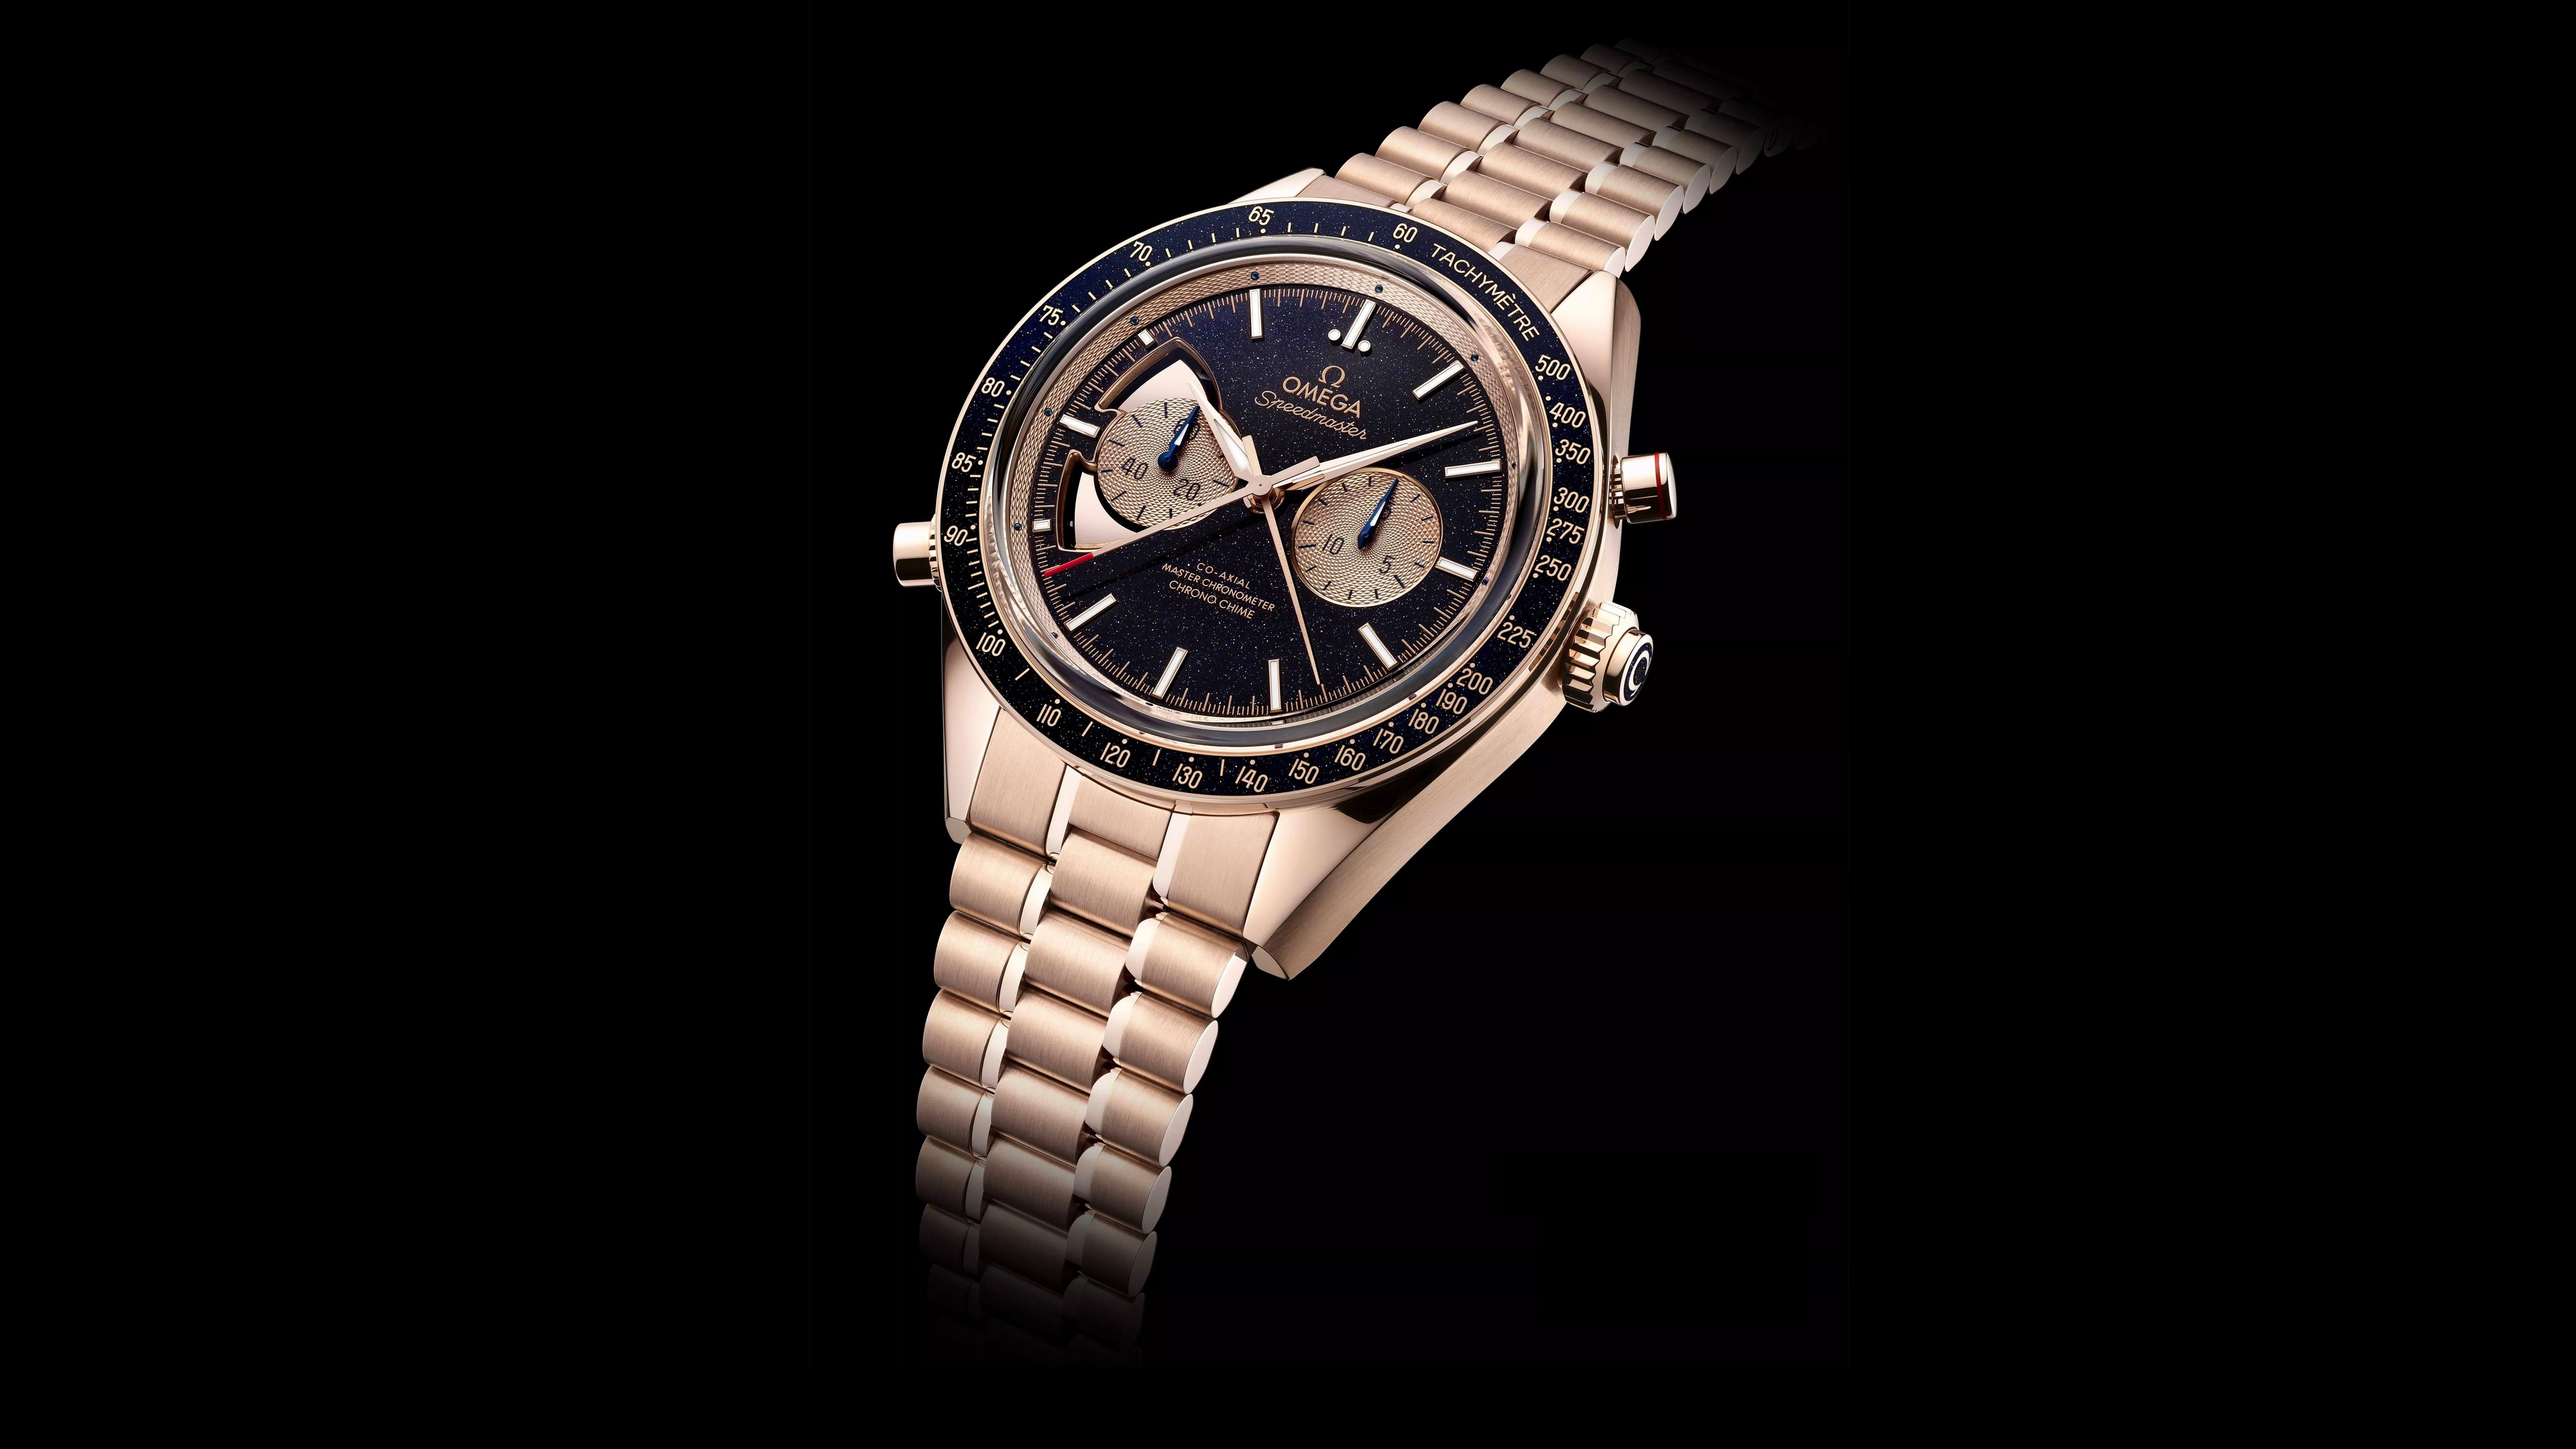 Watch Simple Background Black Background Luxury Watches Wristwatch Omega Watch Minimalism 3840x2160